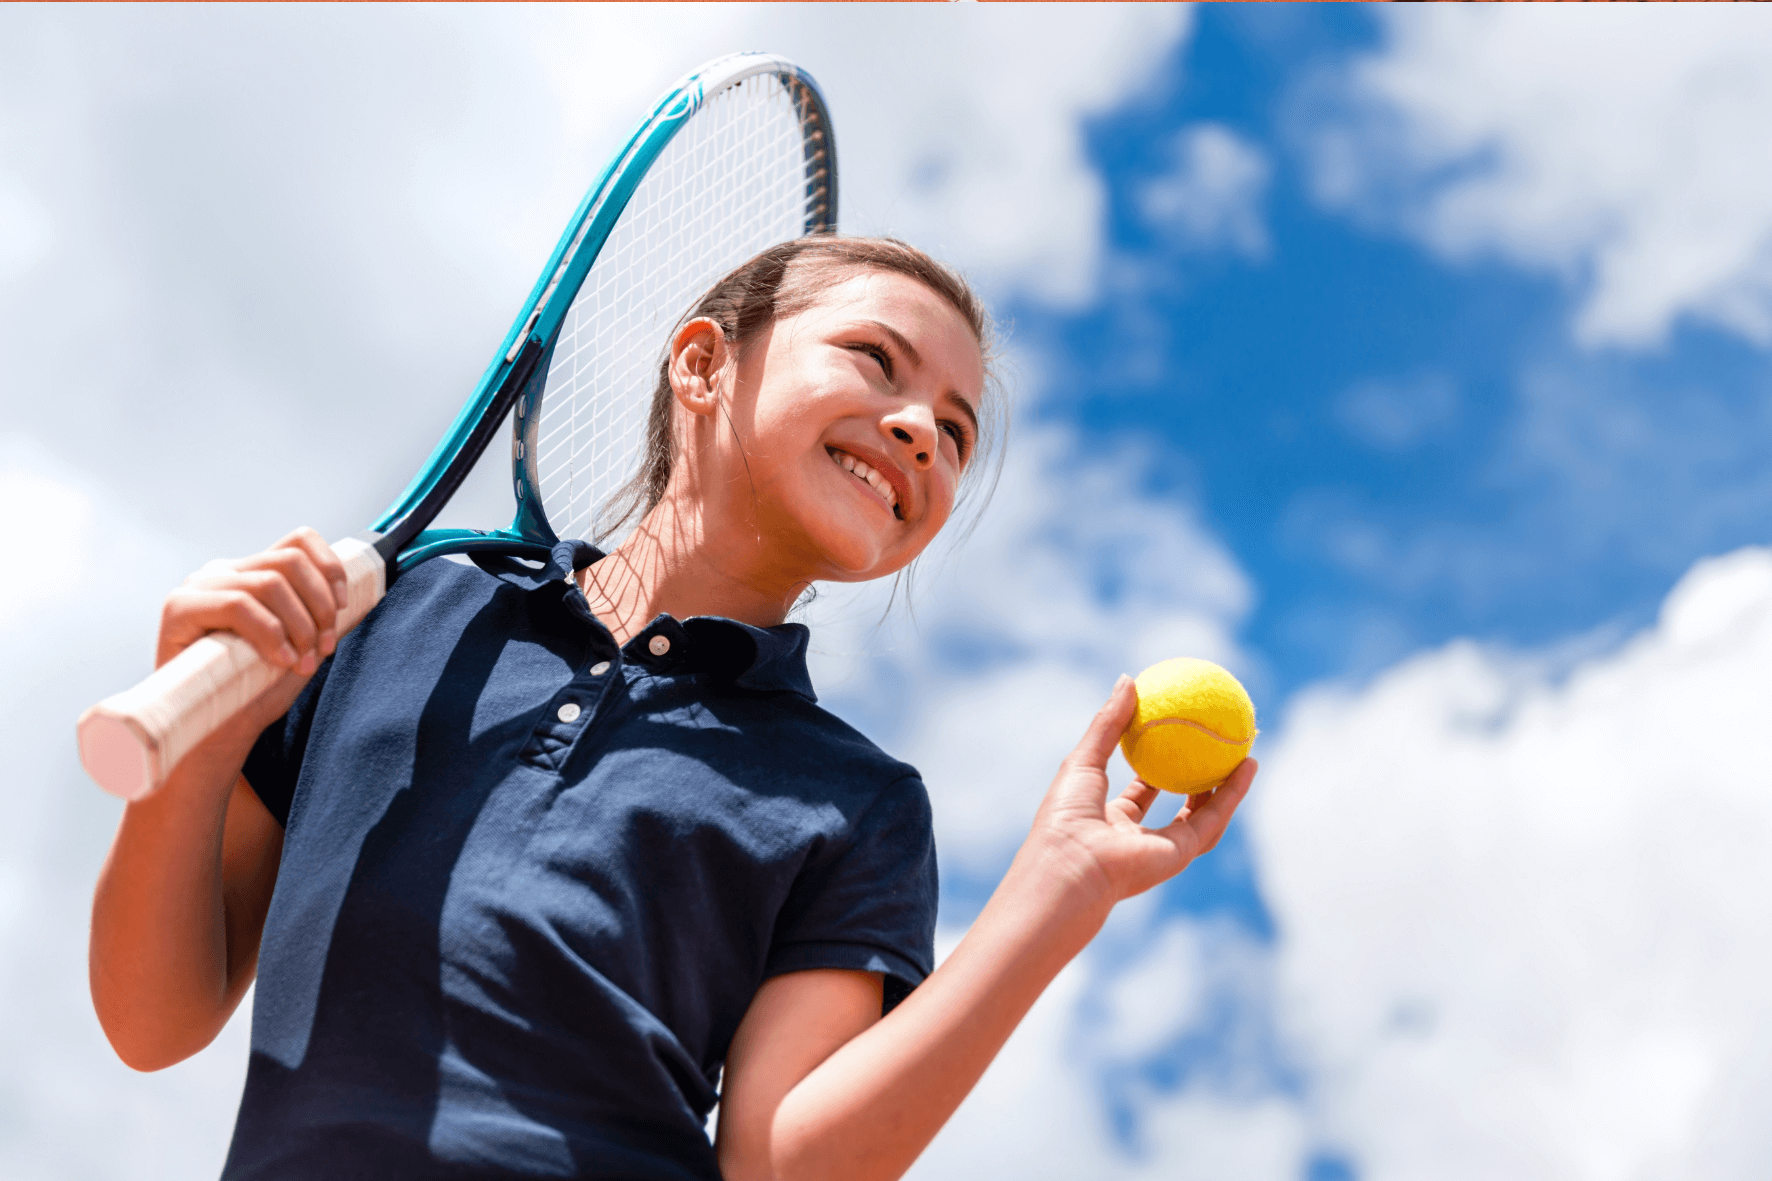 Lezioni di tennis per ragazzi